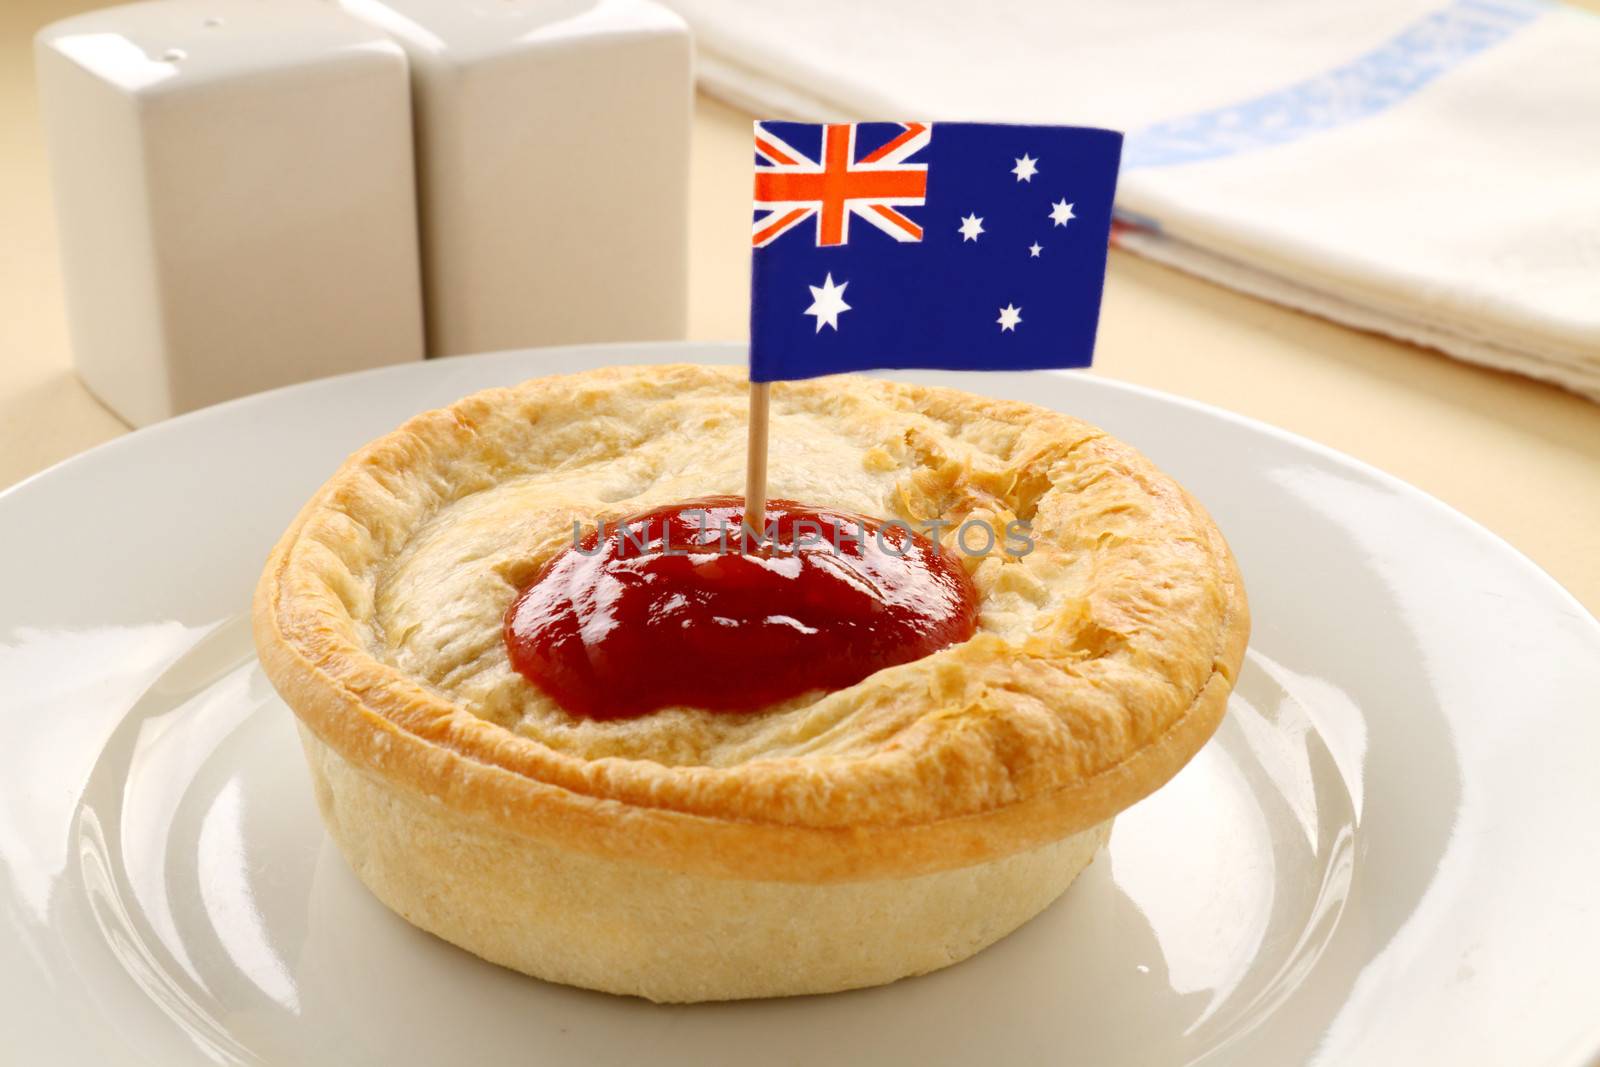 Australian flag on the classic Australian meat pie.